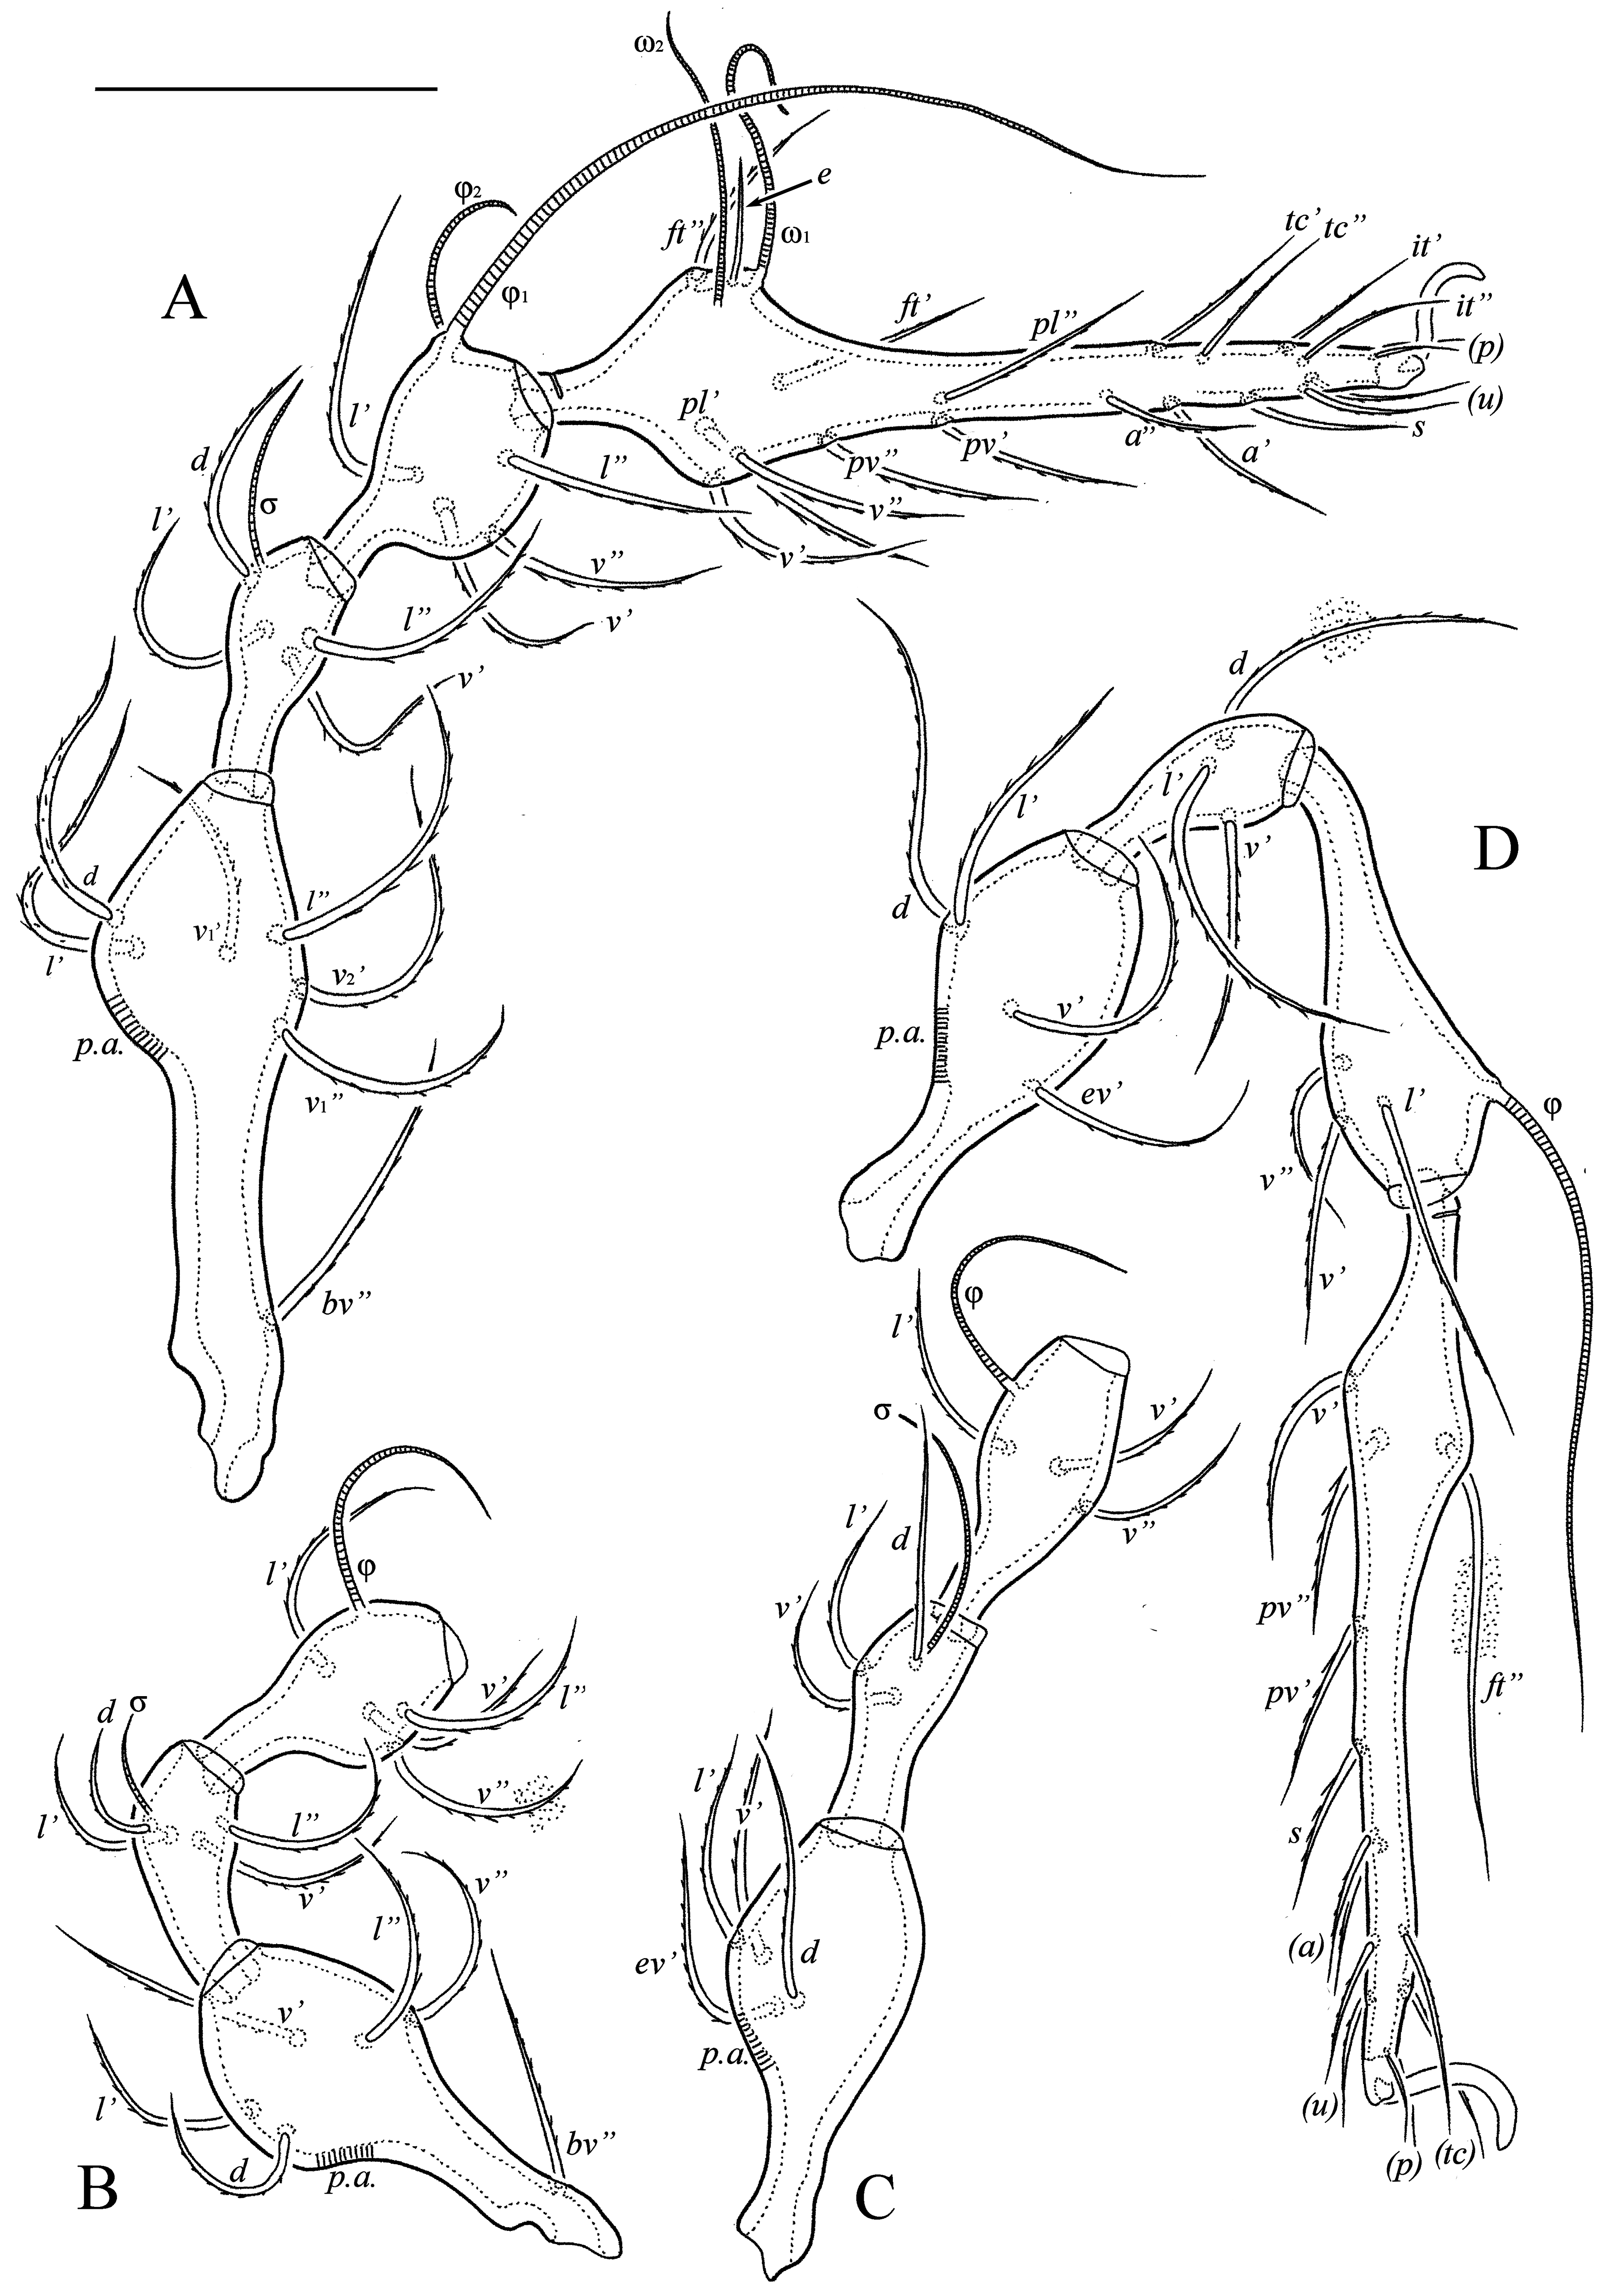 Redescriptions of North American Epidamaeus (Acari, Oribatida, Damaeidae)  species proposed by N. Banks, H.E. Ewing, A.P. Jacot, and J.W. Wilson